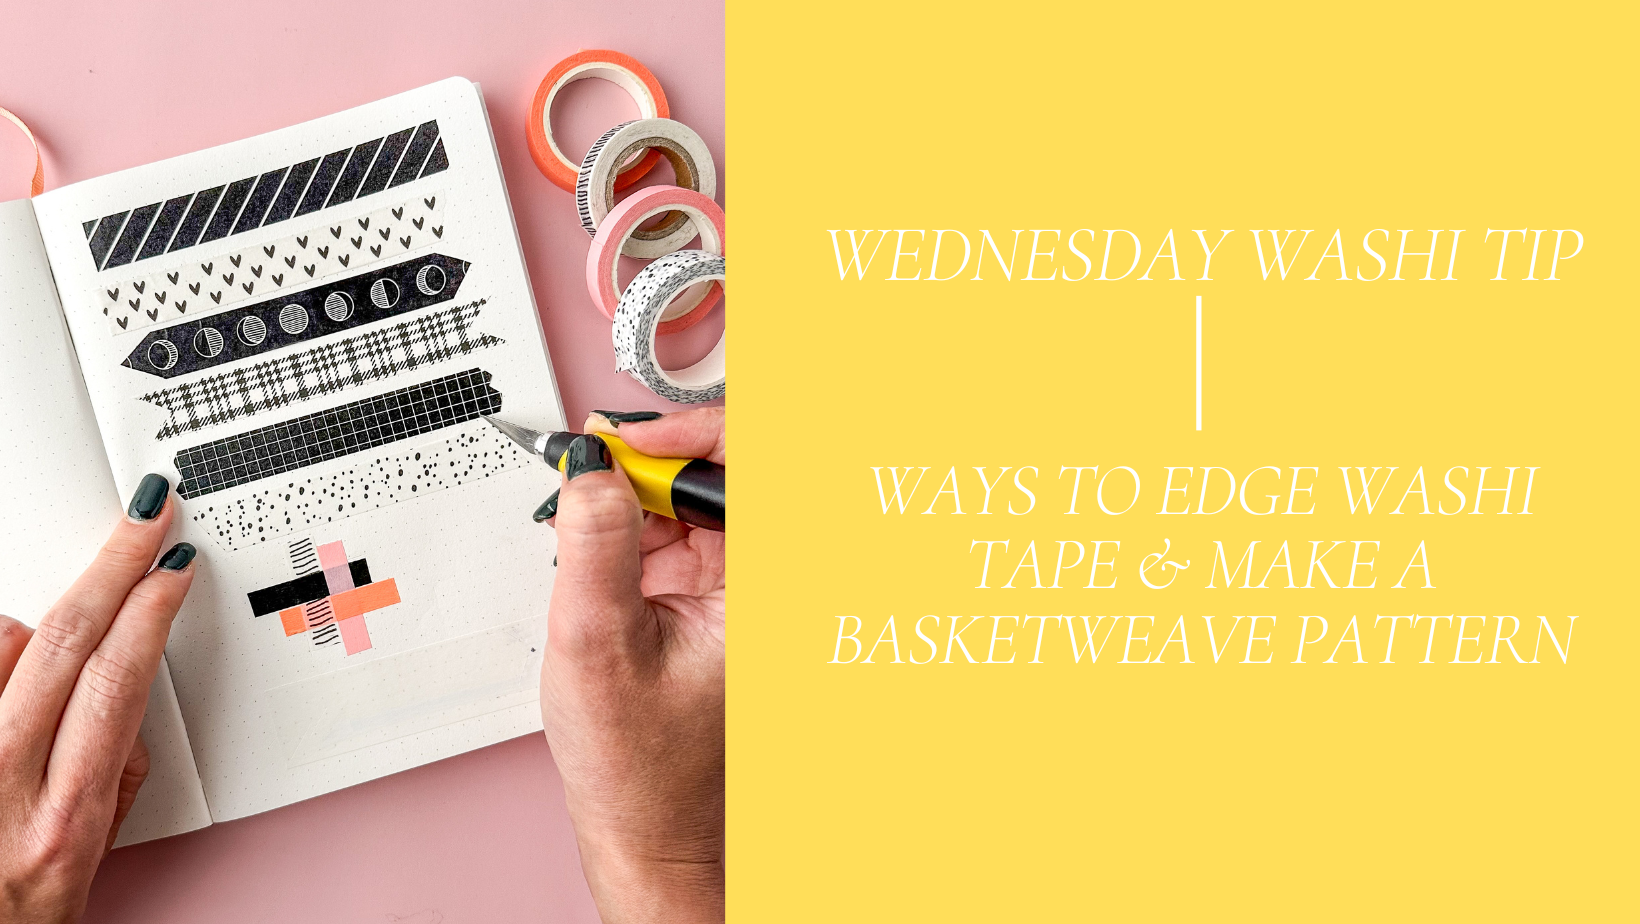 Edging Washi Tape - Wednesday Washi Tip